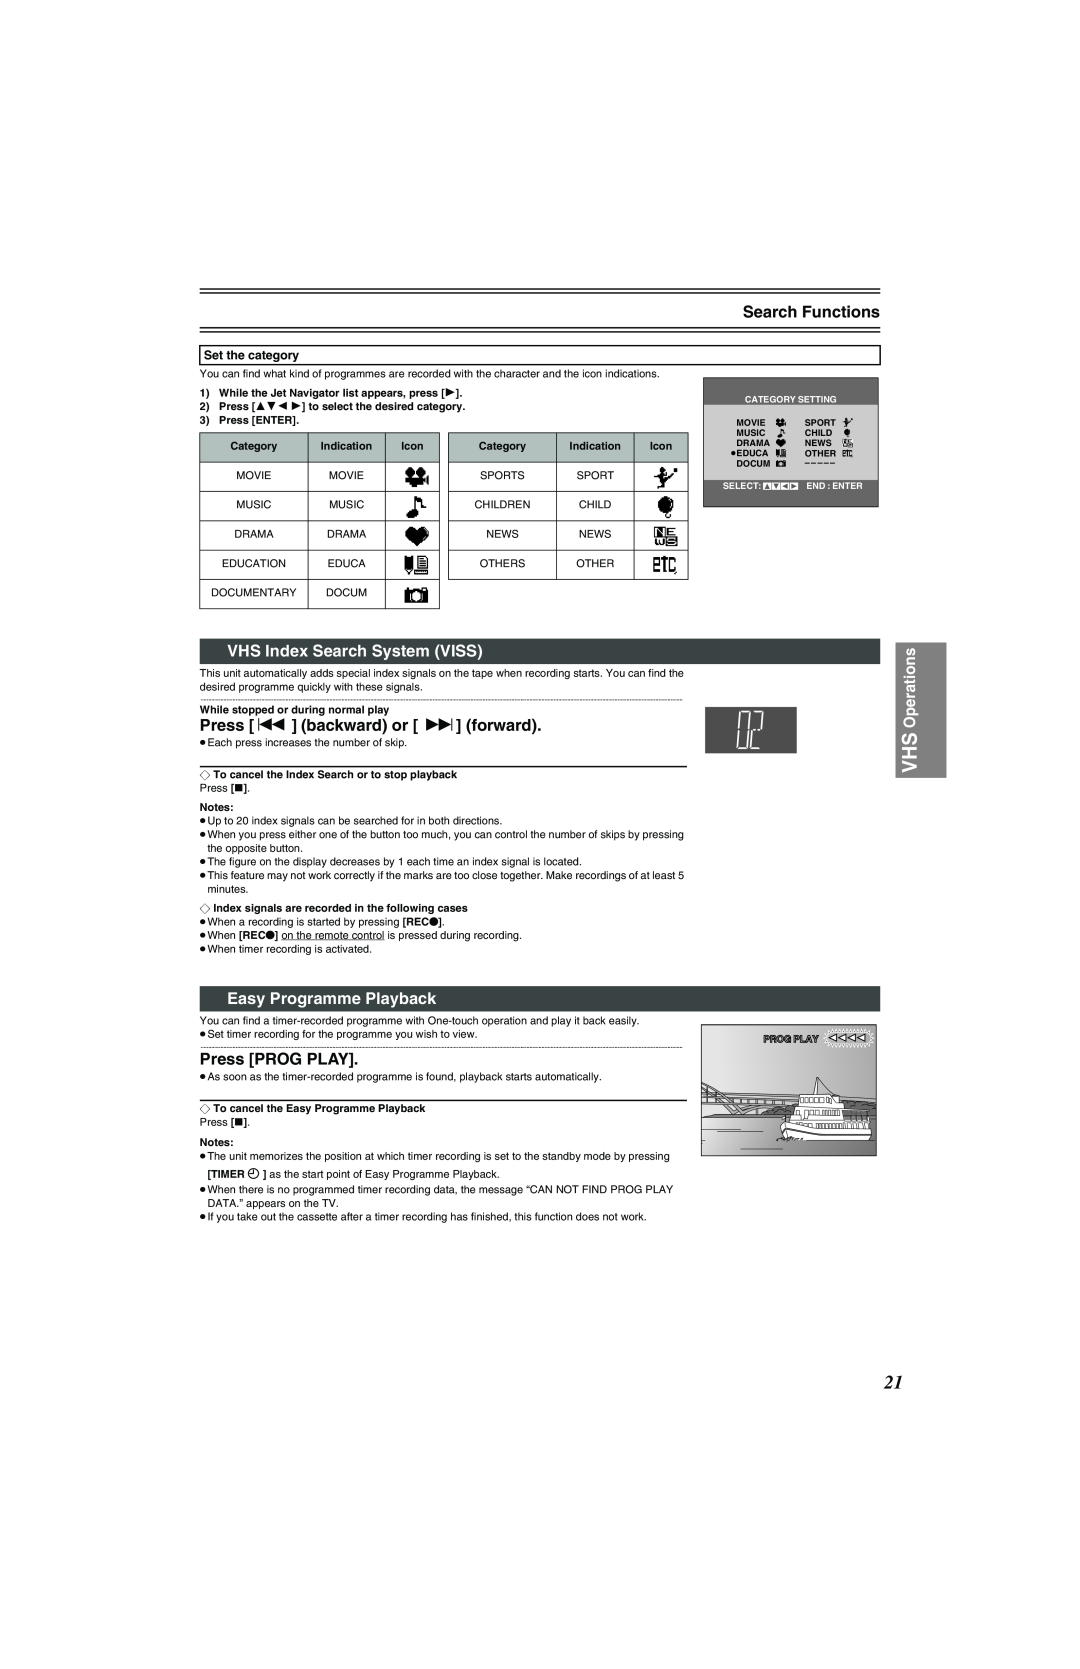 Panasonic NV-VP32 Series Search Functions, VHS Index Search System VISS, Press backward or 9 forward, Press PROG PLAY 